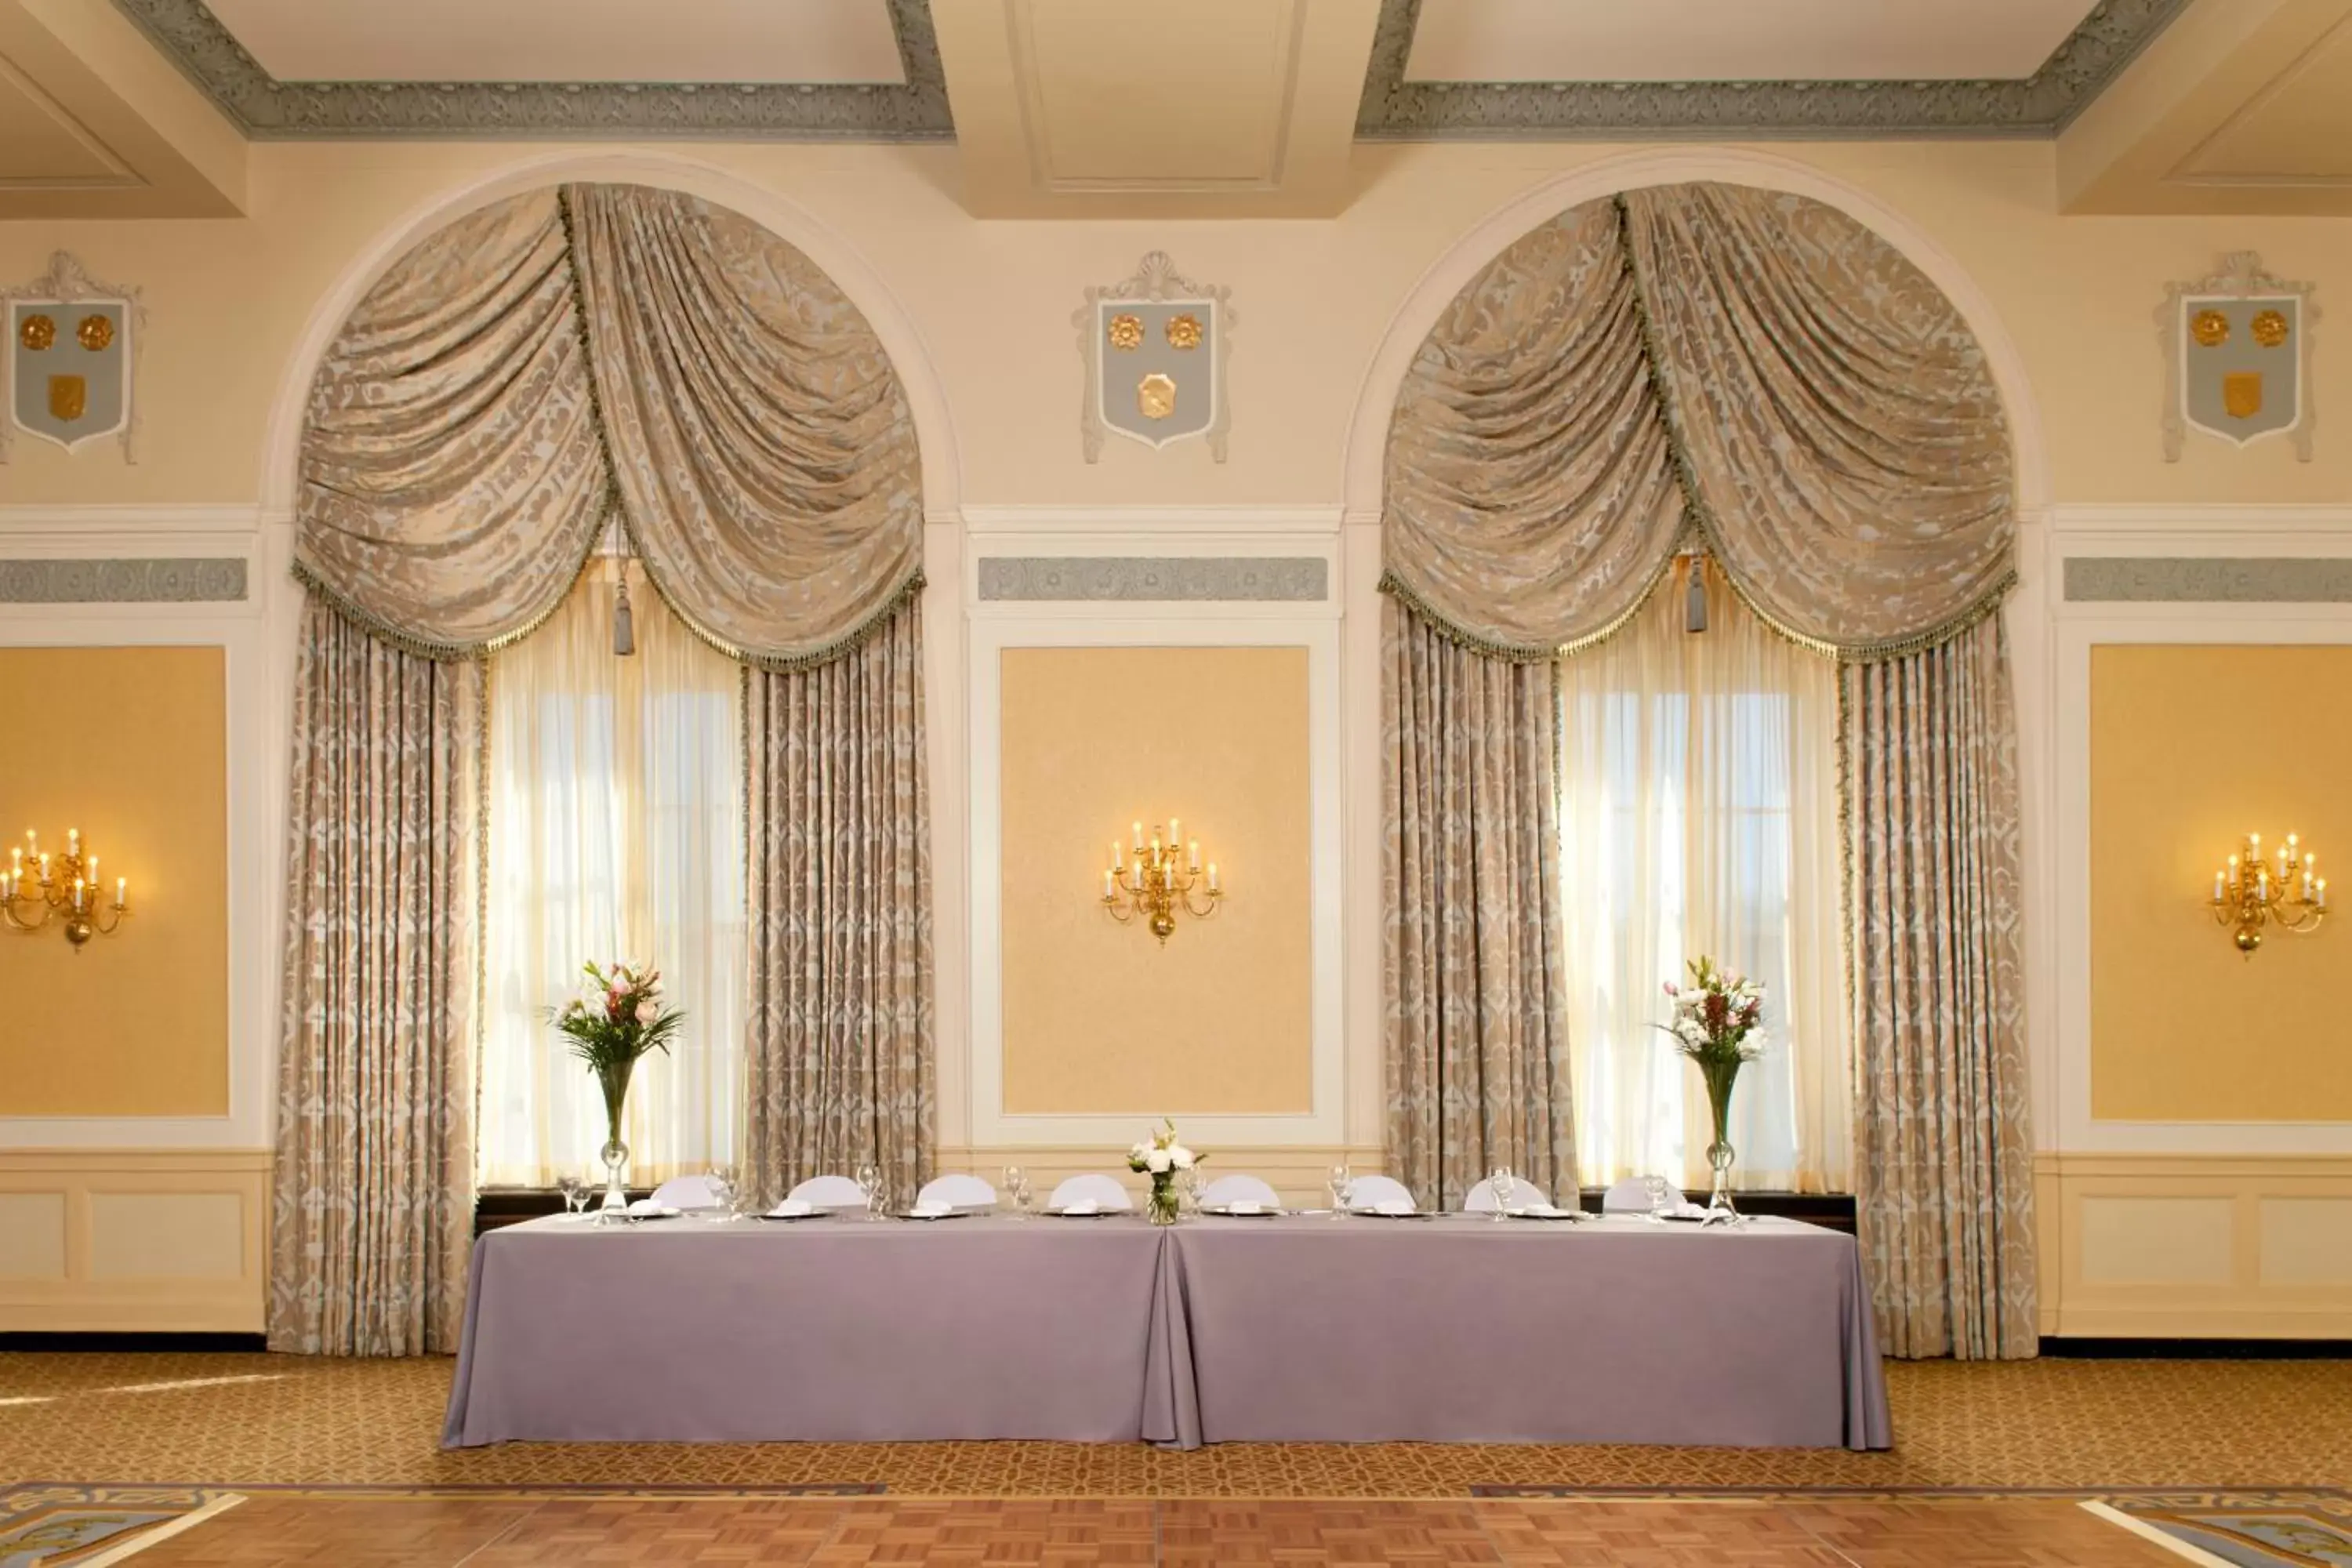 Banquet/Function facilities, Banquet Facilities in Francis Marion Hotel